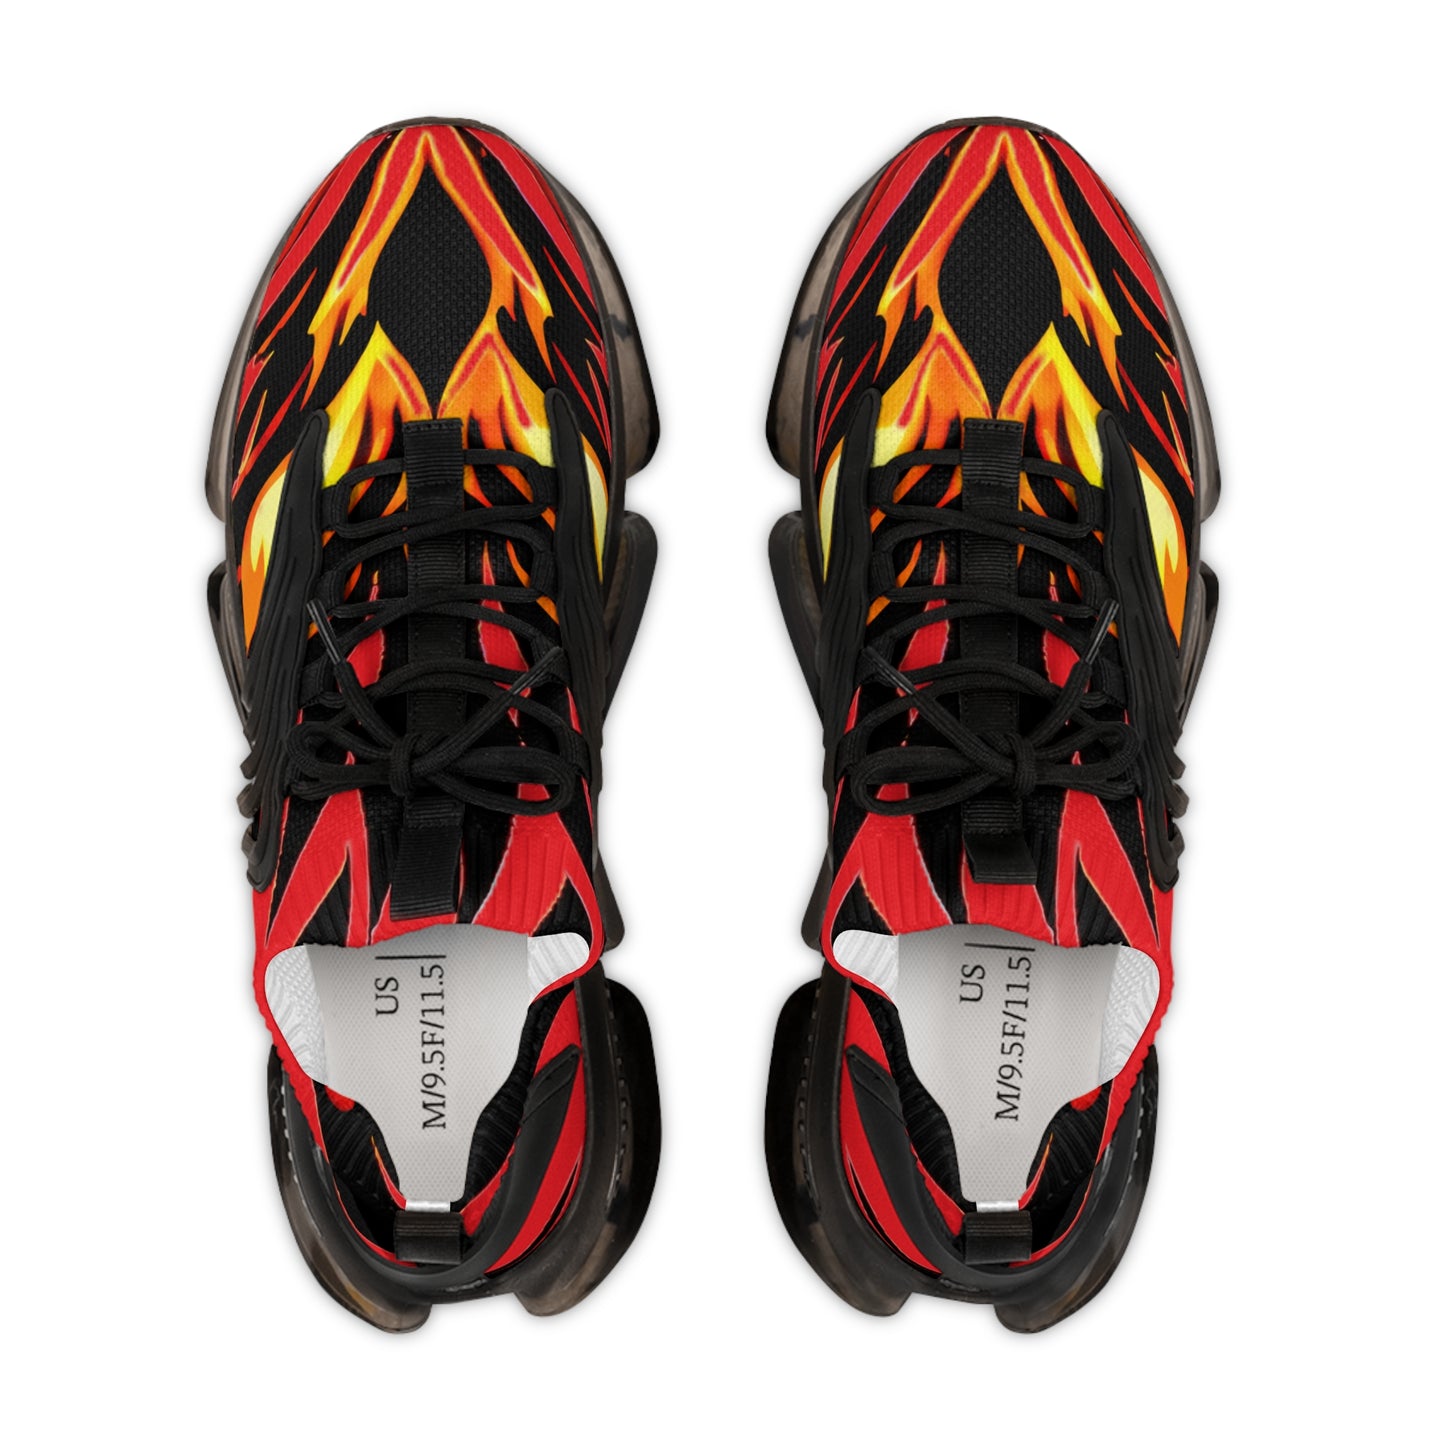 Fury Flame Mesh Black Sole Sneakers